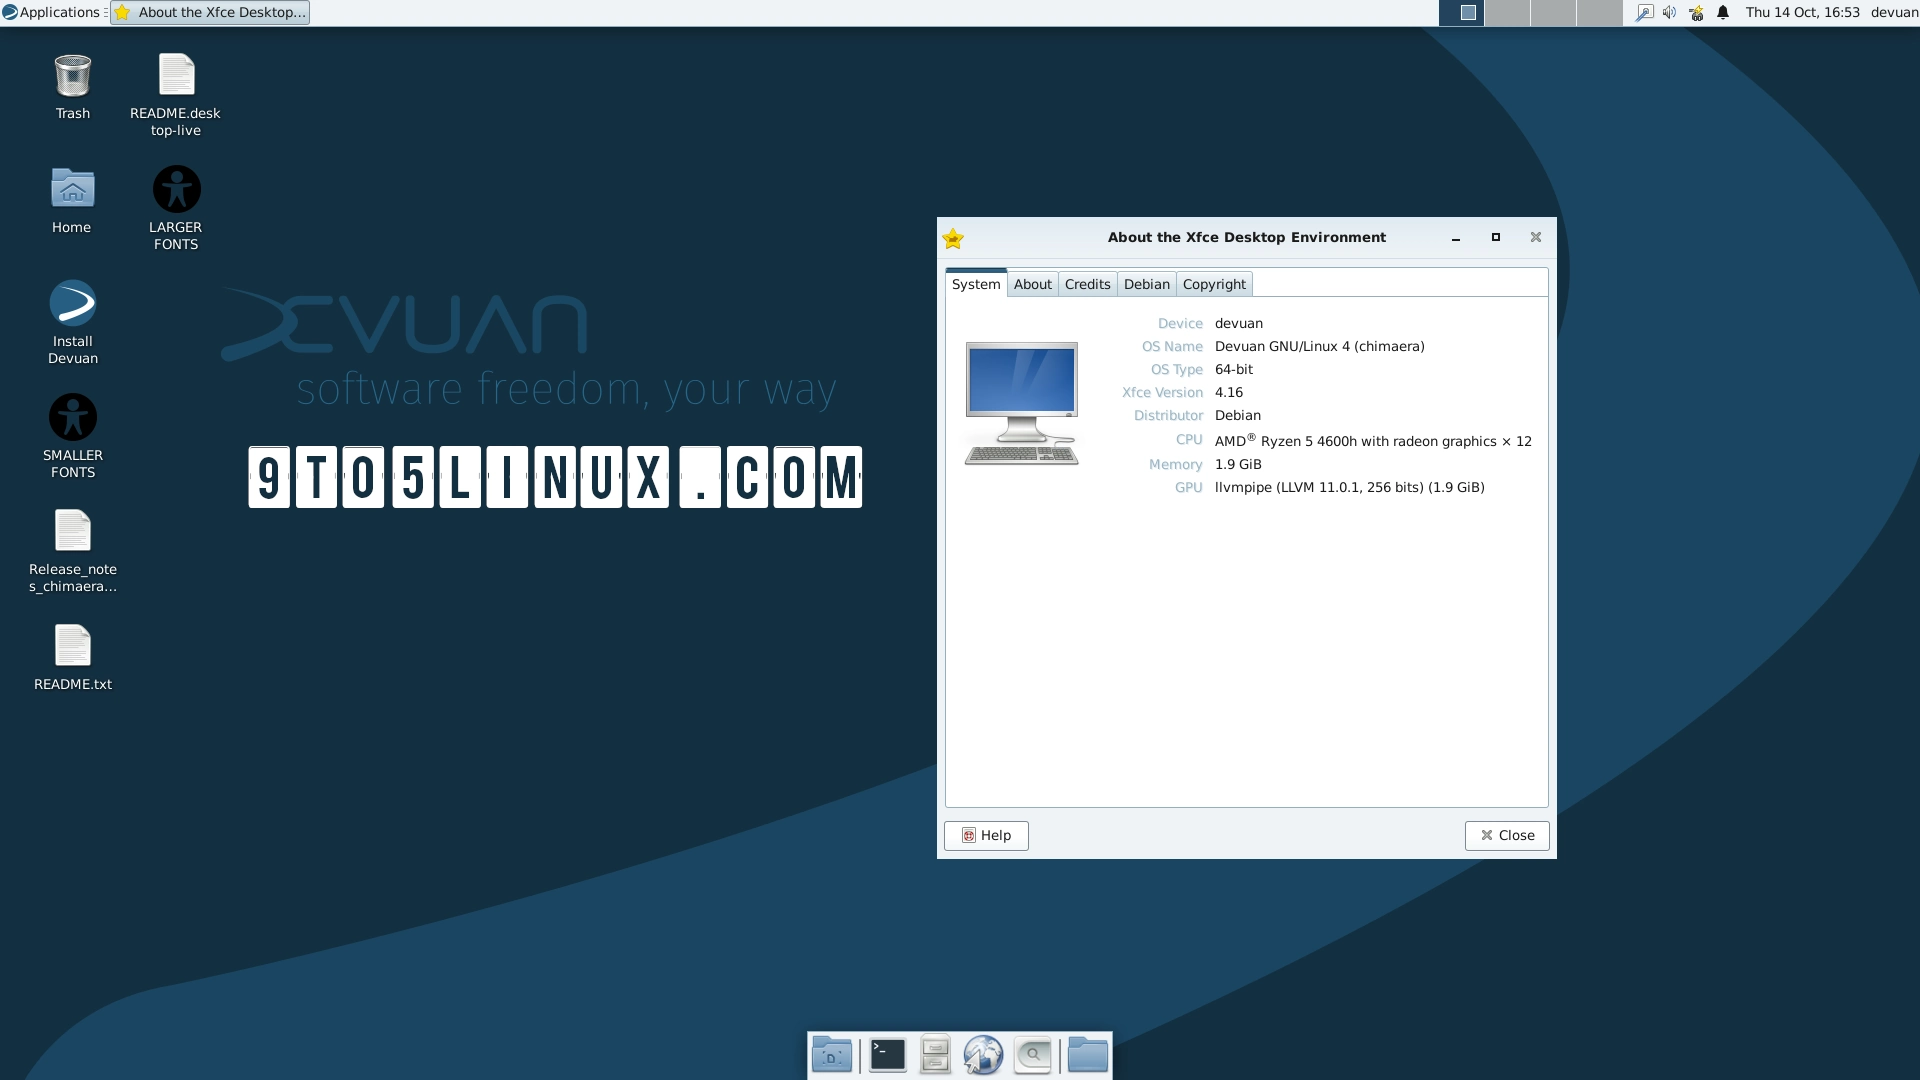 Devuan GNU+Linux 4.0 “Chimaera” Released for Software Freedom Lovers, Based on Debian Bullseye